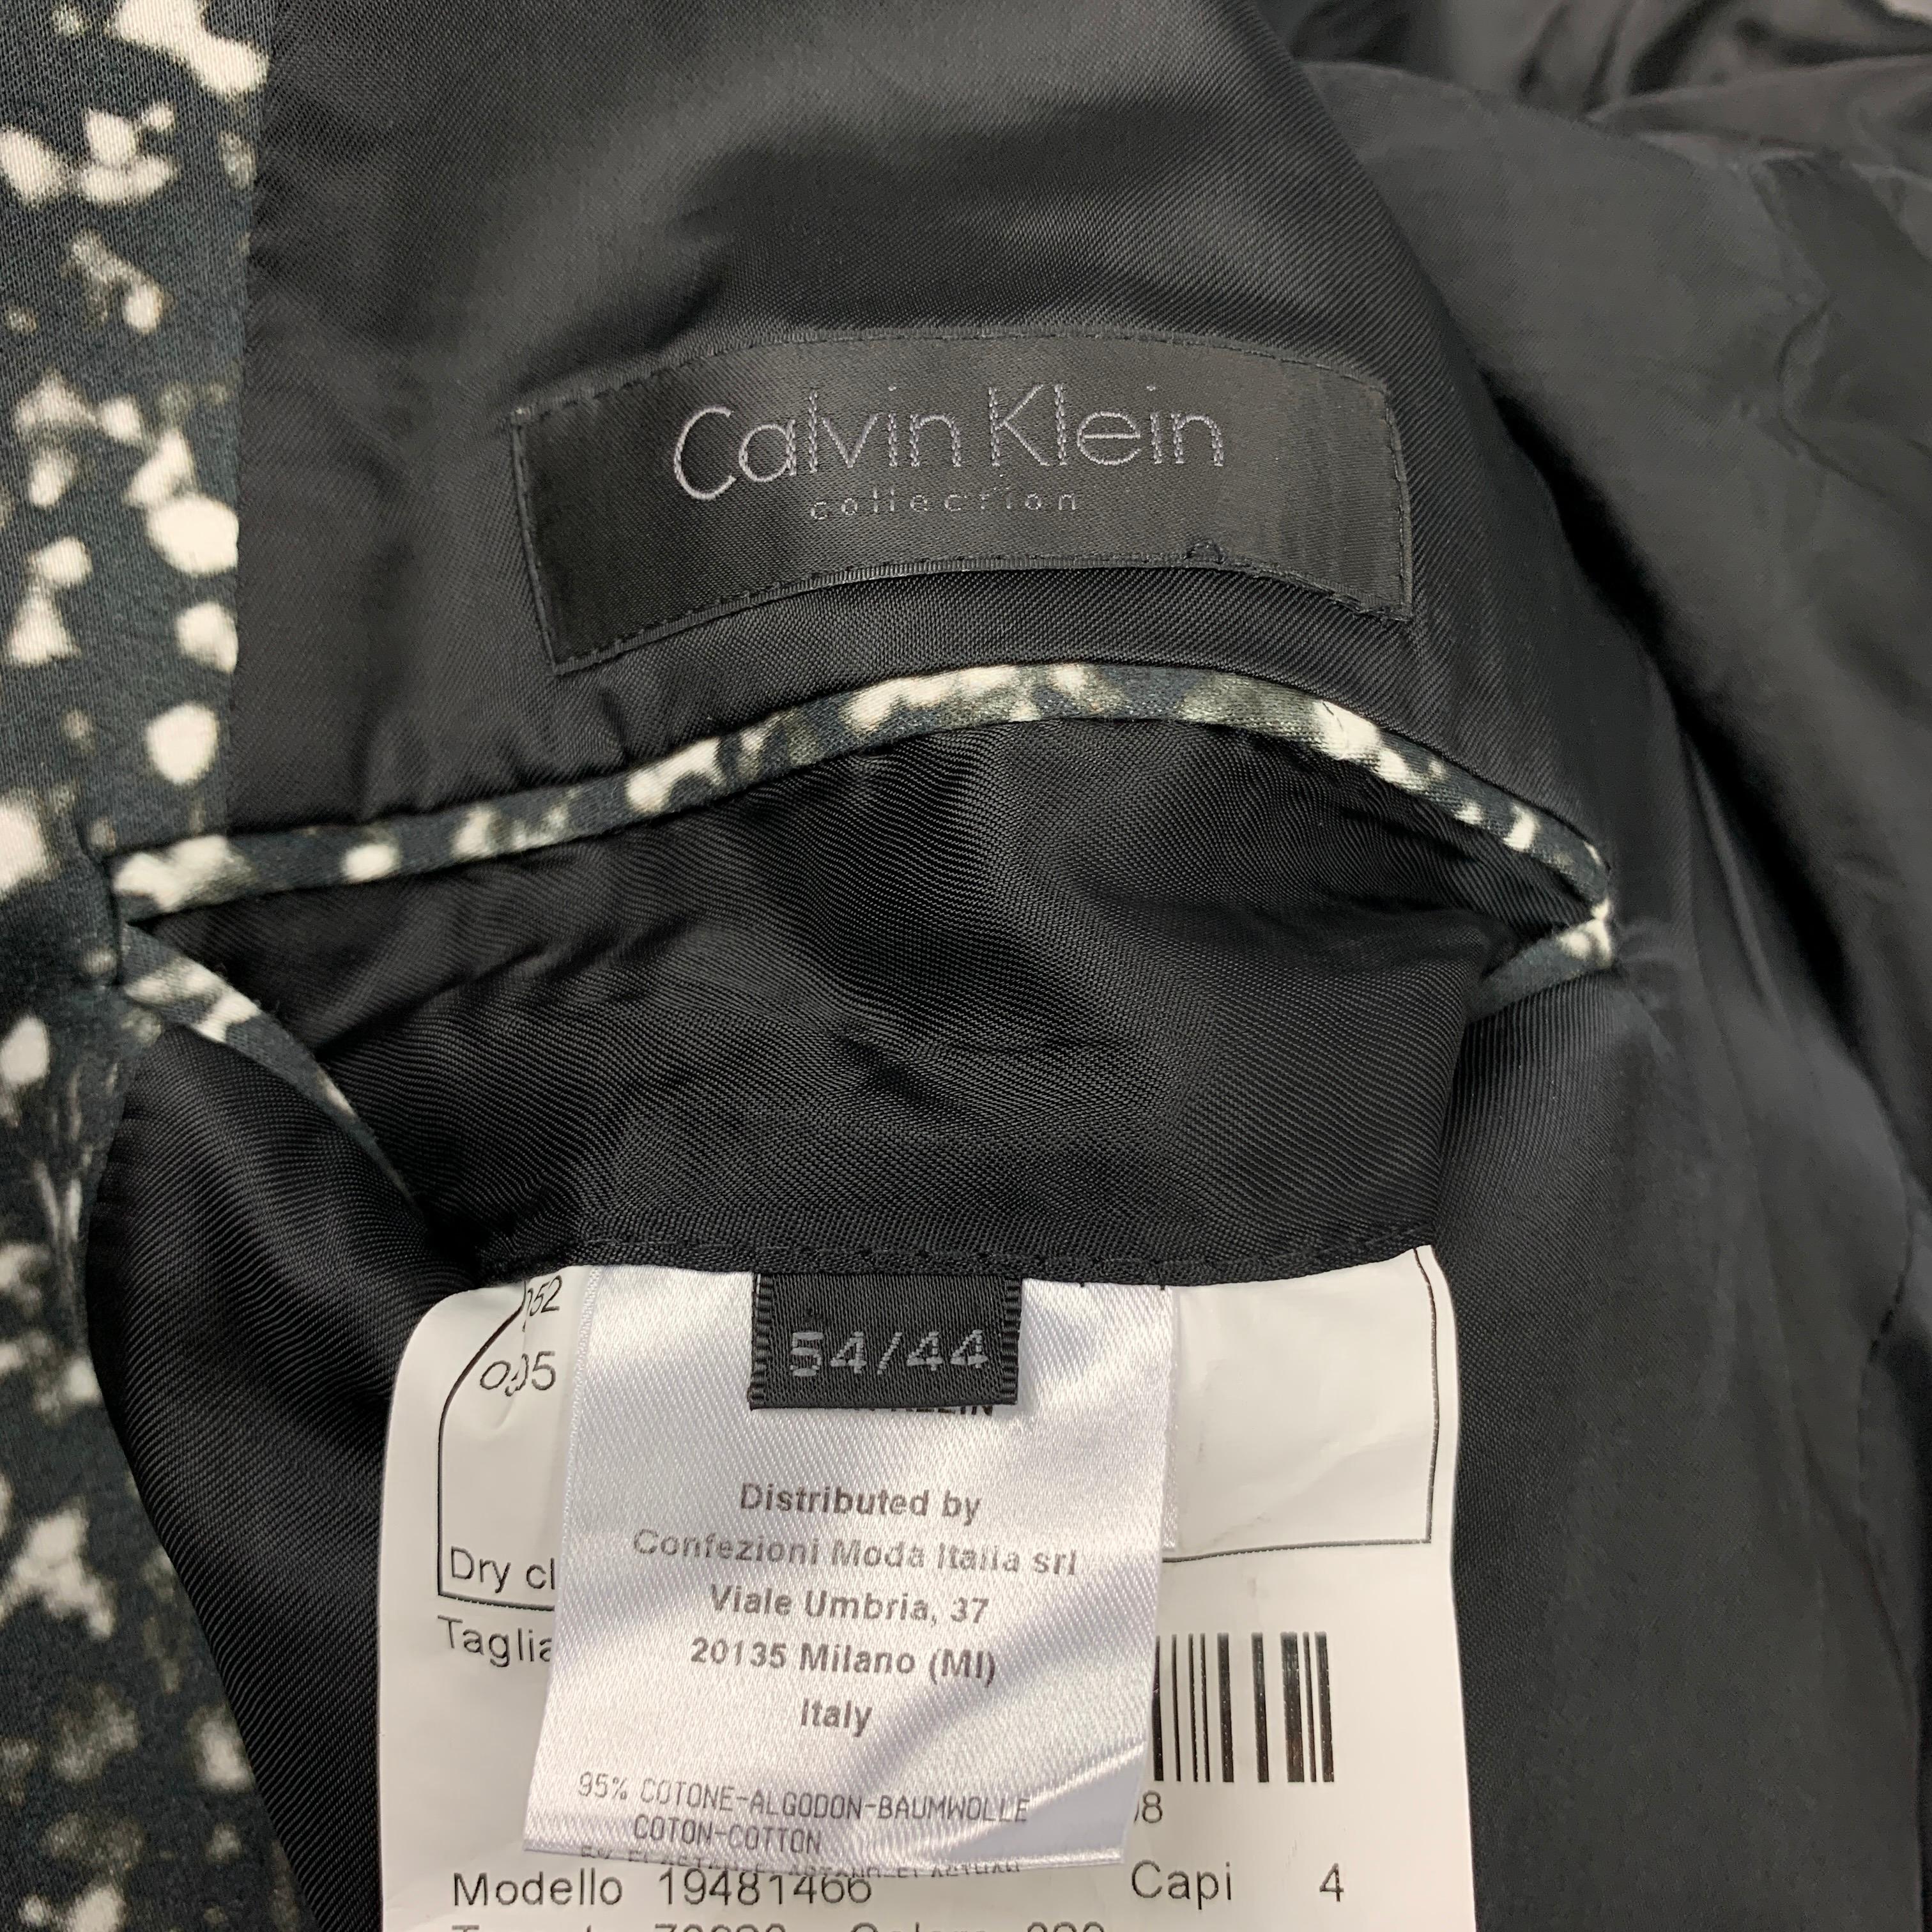 CALVIN KLEIN COLLECTION Size 44 Black & White Print Cotton Blend Sport Coat 4